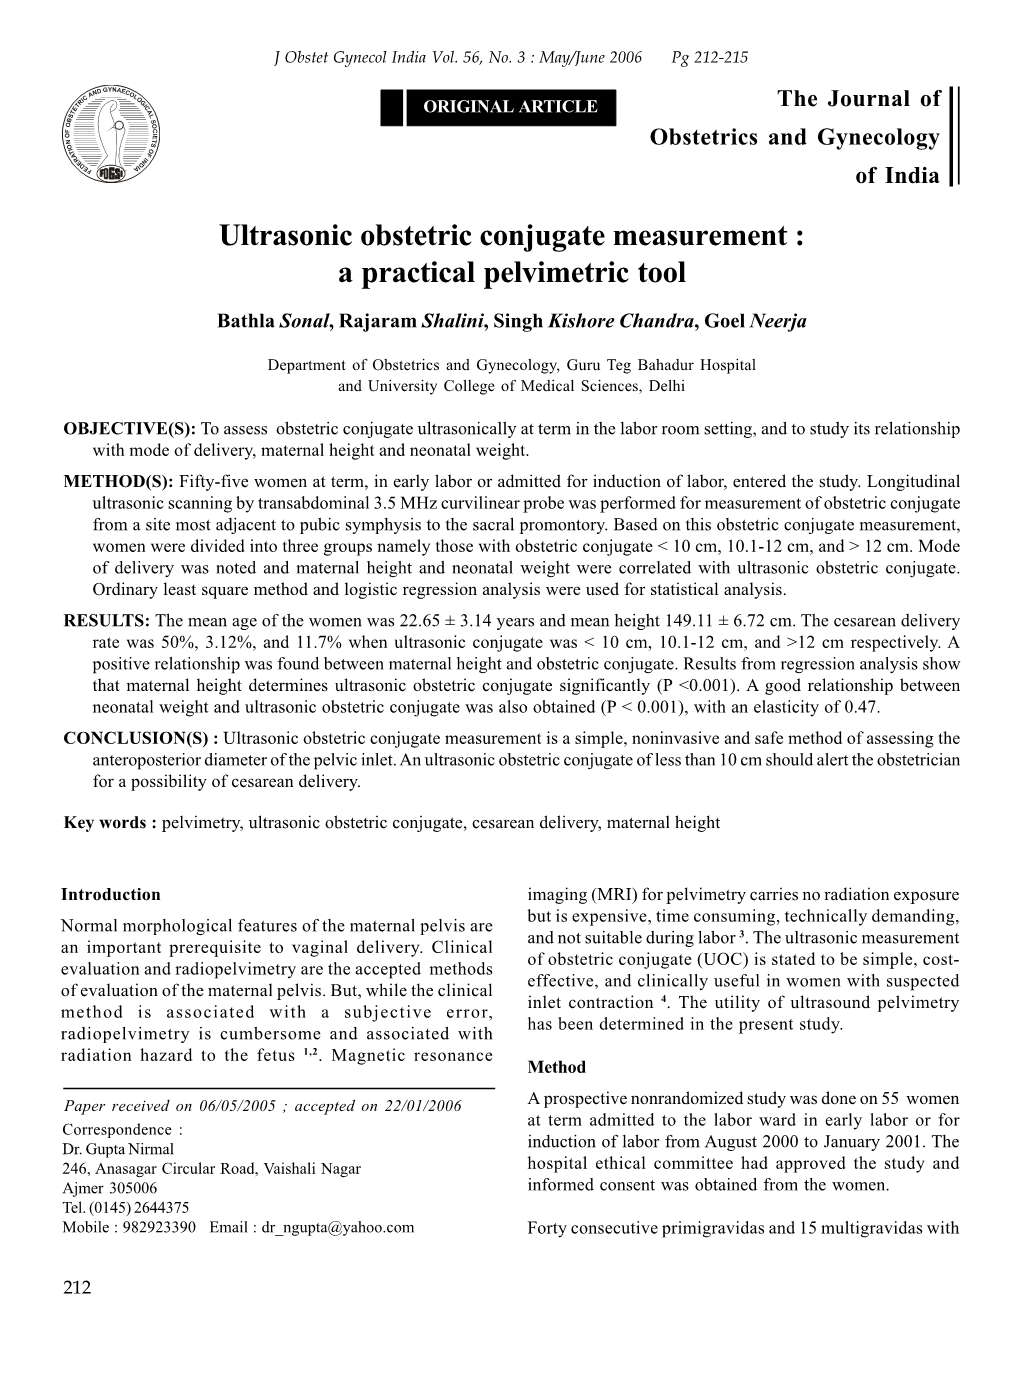 Ultrasonic Obstetric Conjugate Measurement : a Practical Pelvimetric Tool